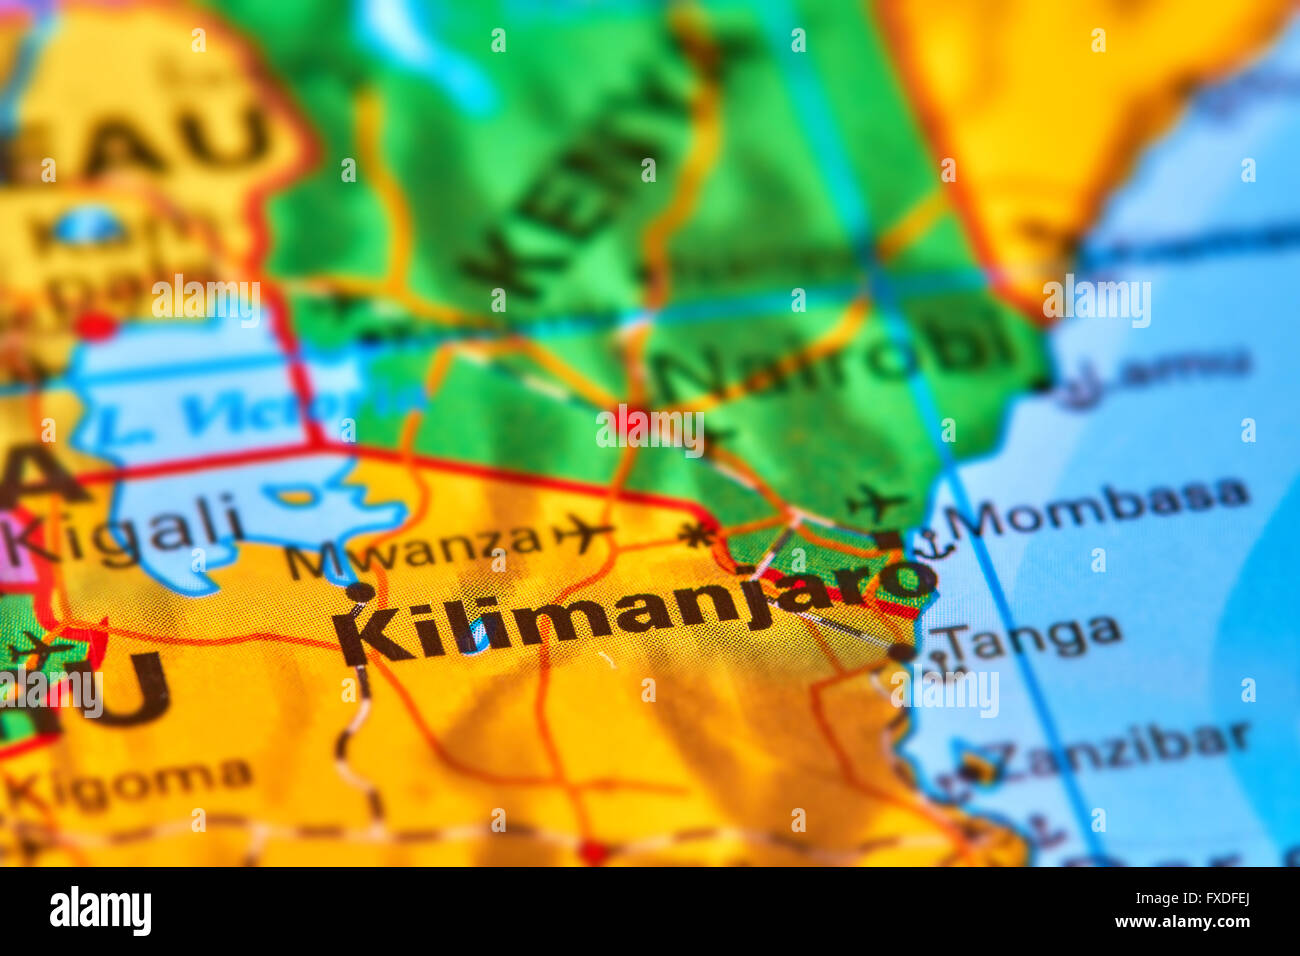 kilimanjaro Mountain in Africa on the World Map Stock Photo